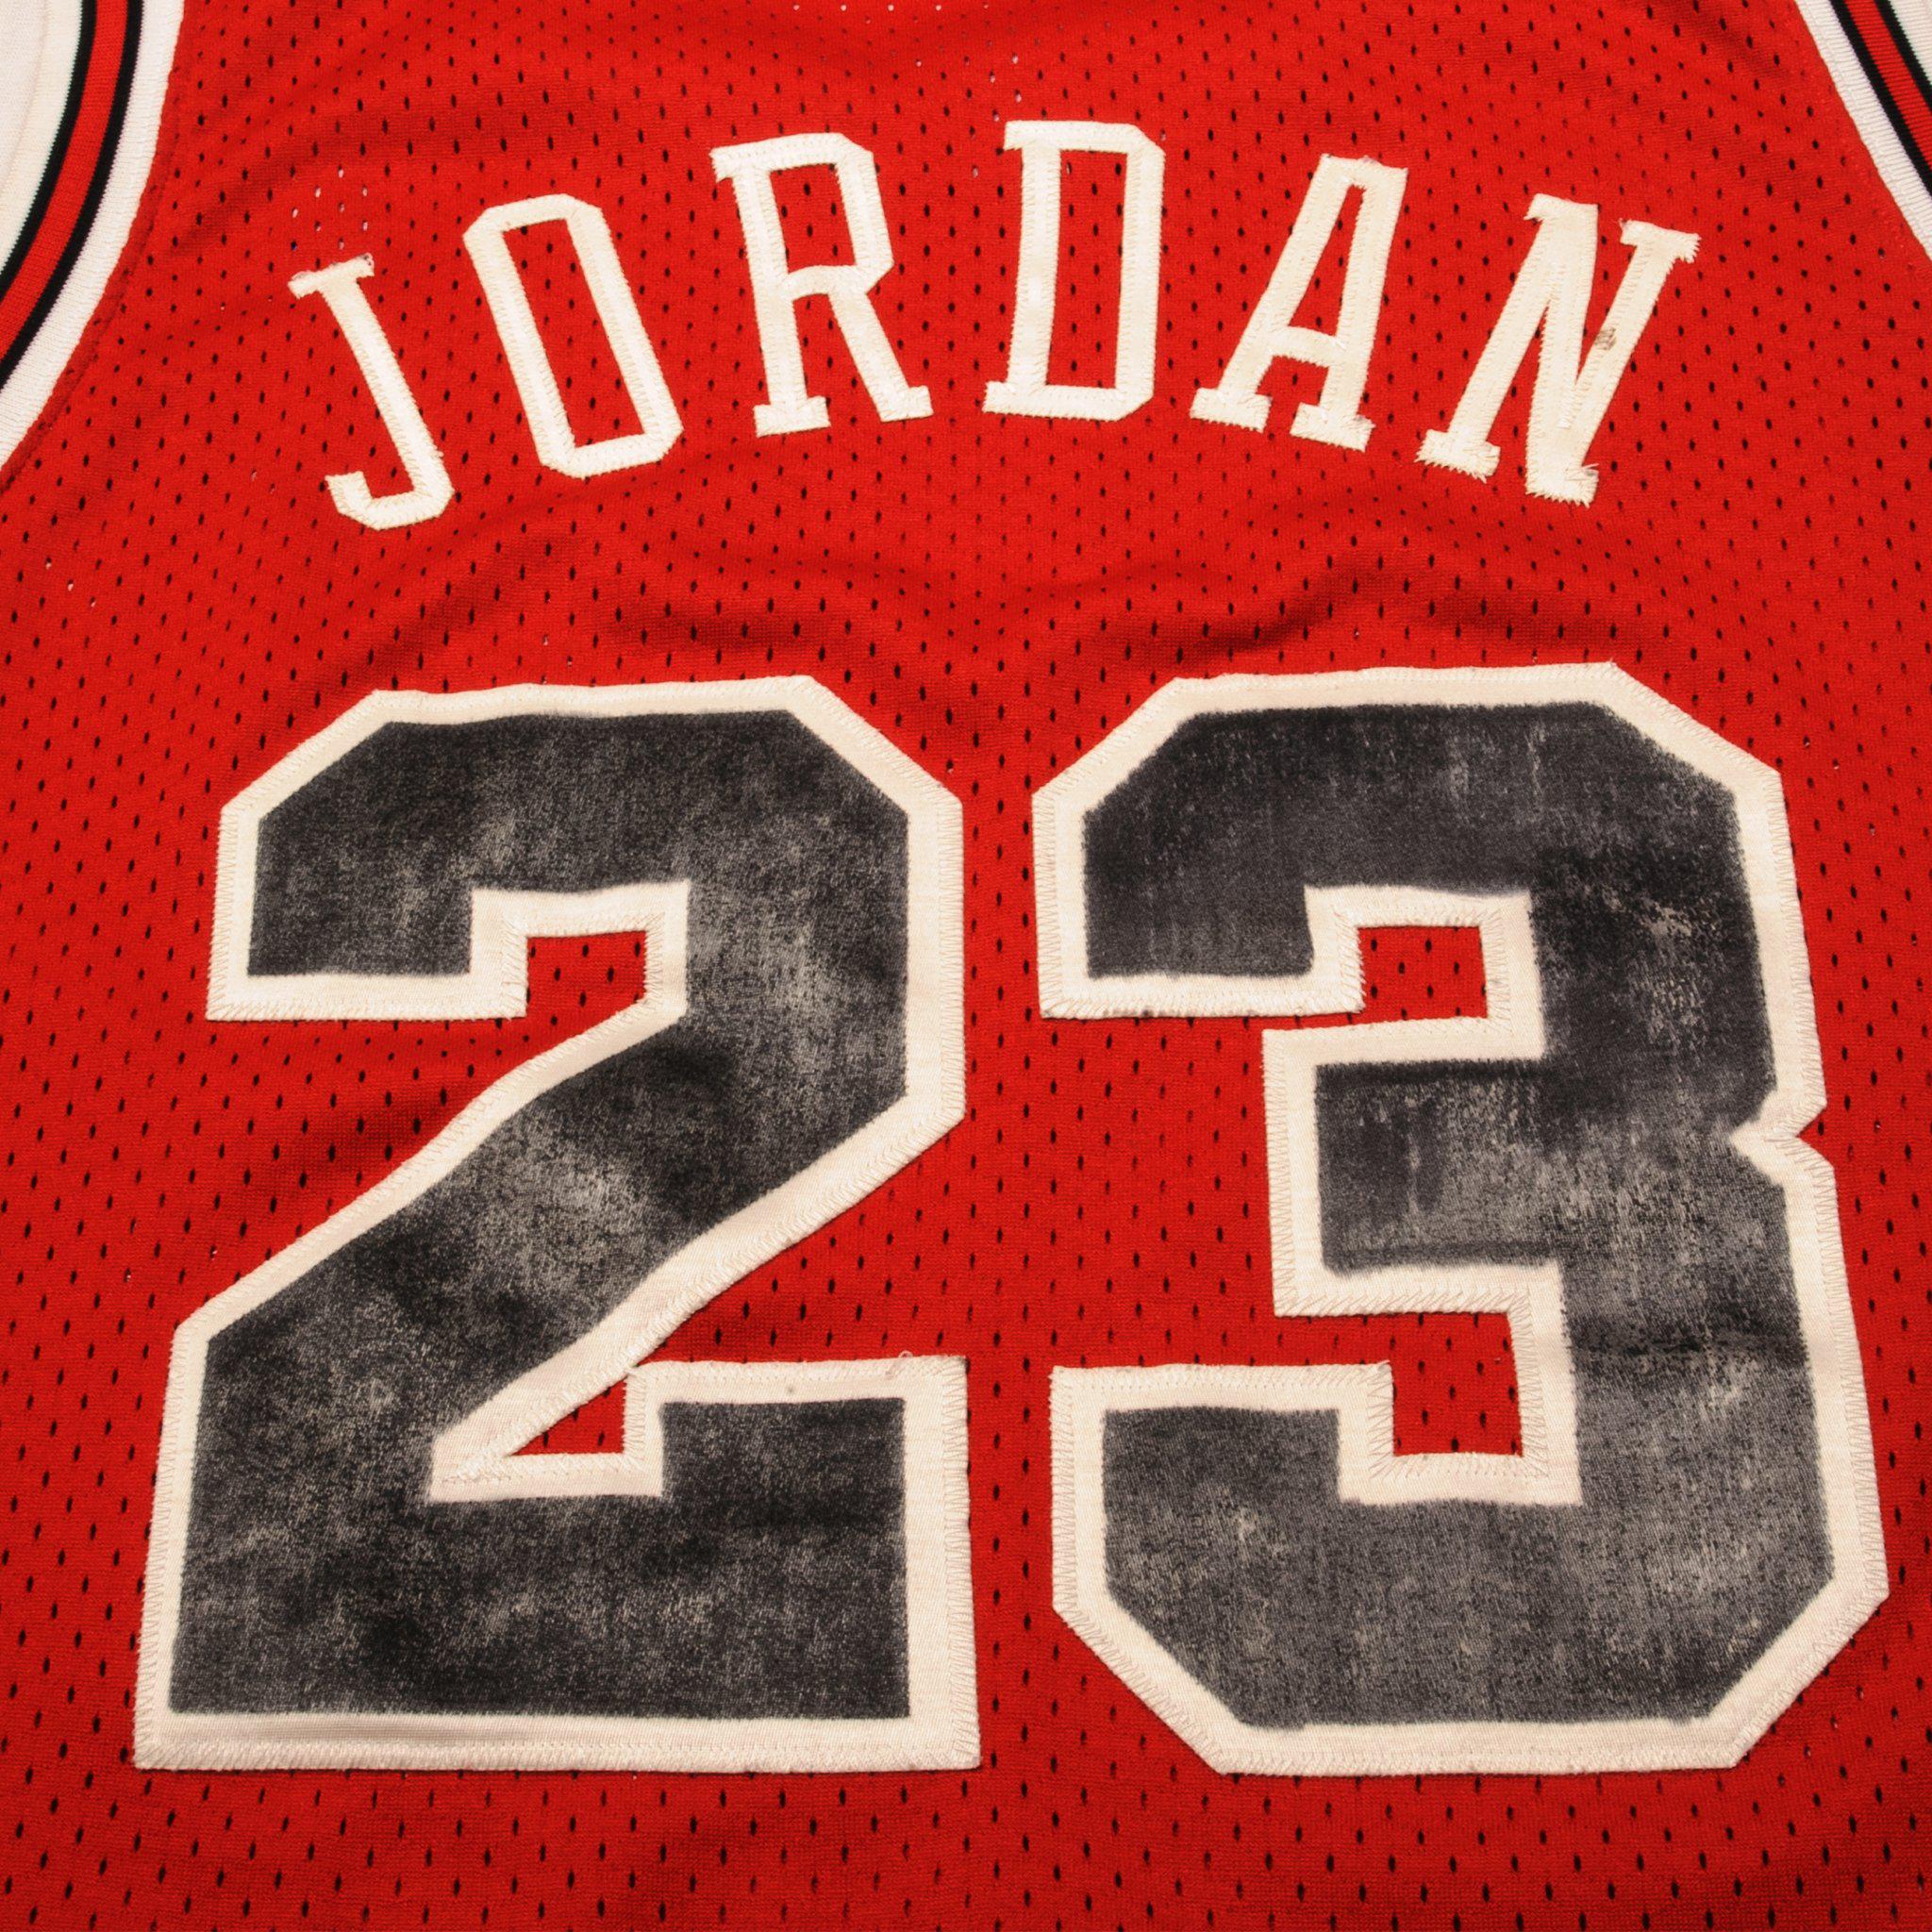 Vintage Nike Michael Jordan Bulls Sewn Jersey Mens Medium Black Red Stripe